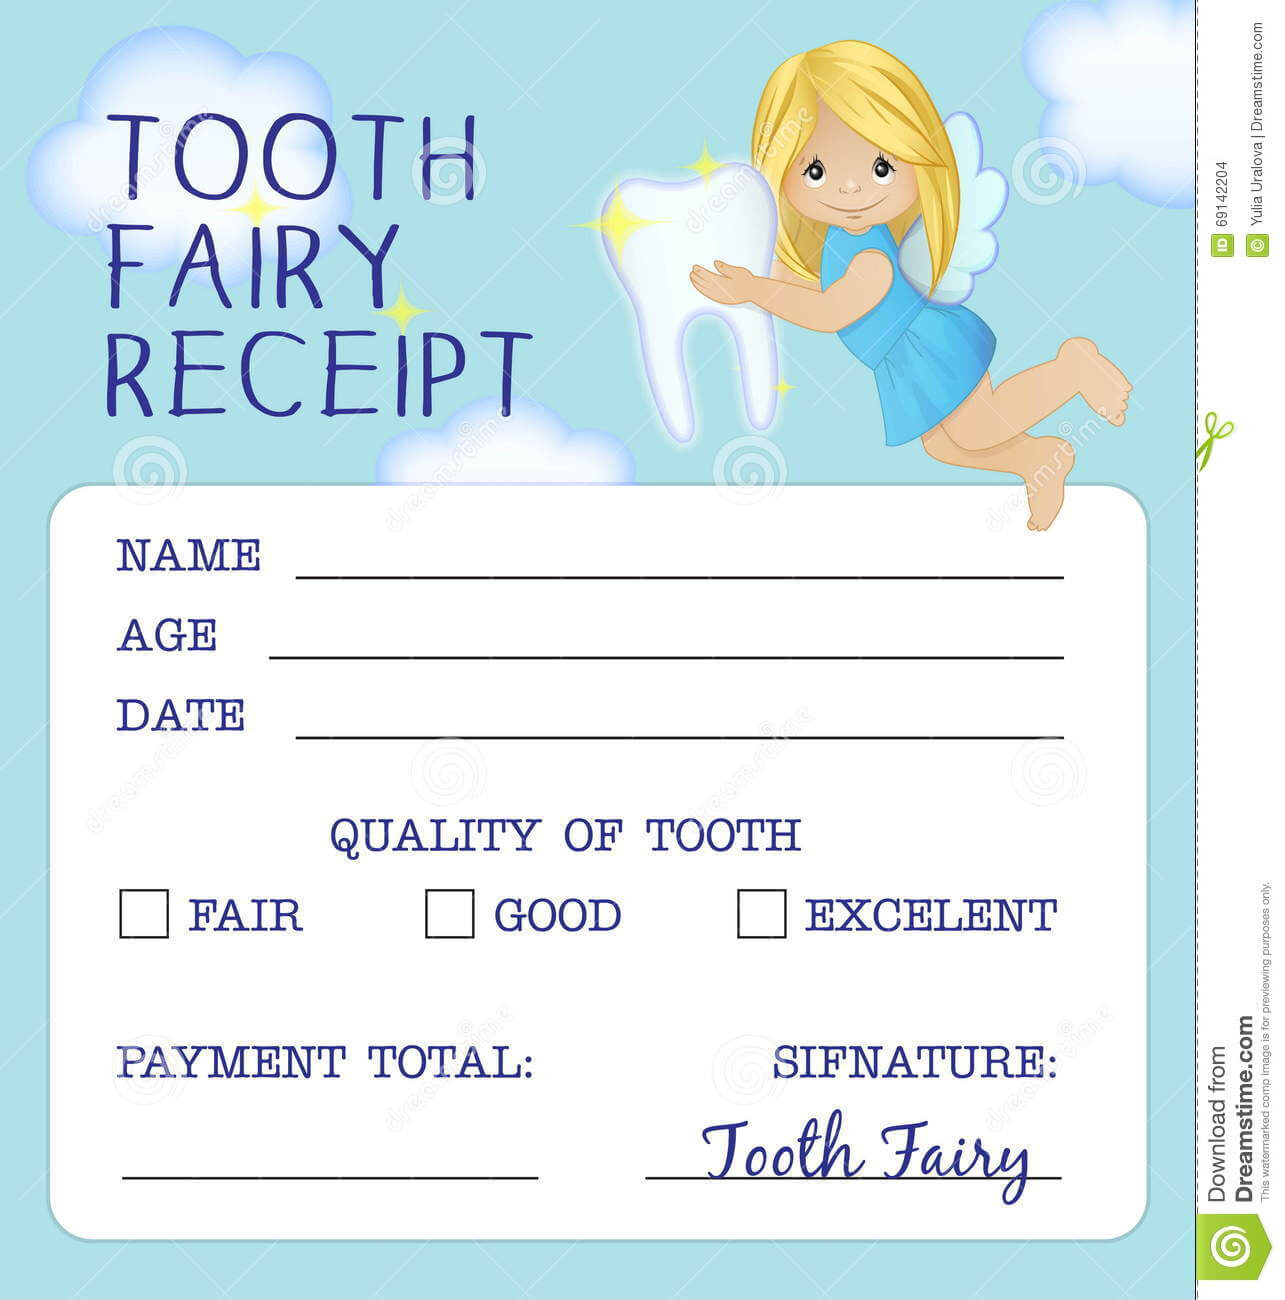 Tooth Fairy Receipt Certificate Design Stock Vector With Tooth Fairy Certificate Template Free